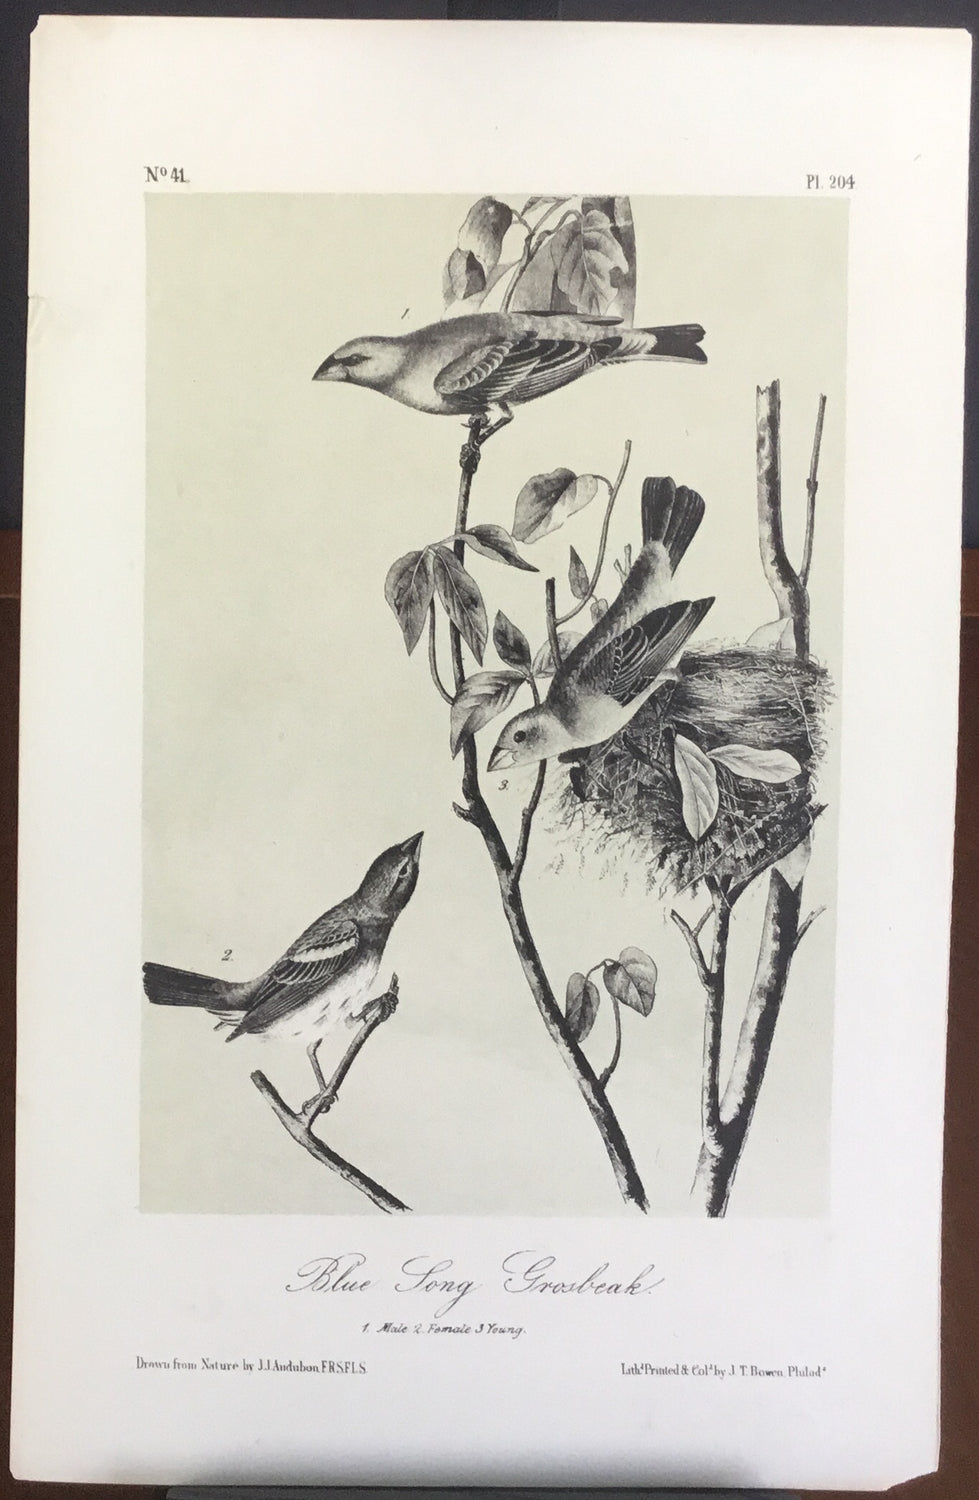 Audubon Octavo Blue Long Grosbeak, plate 204, uncolored test sheet, 7 x 11